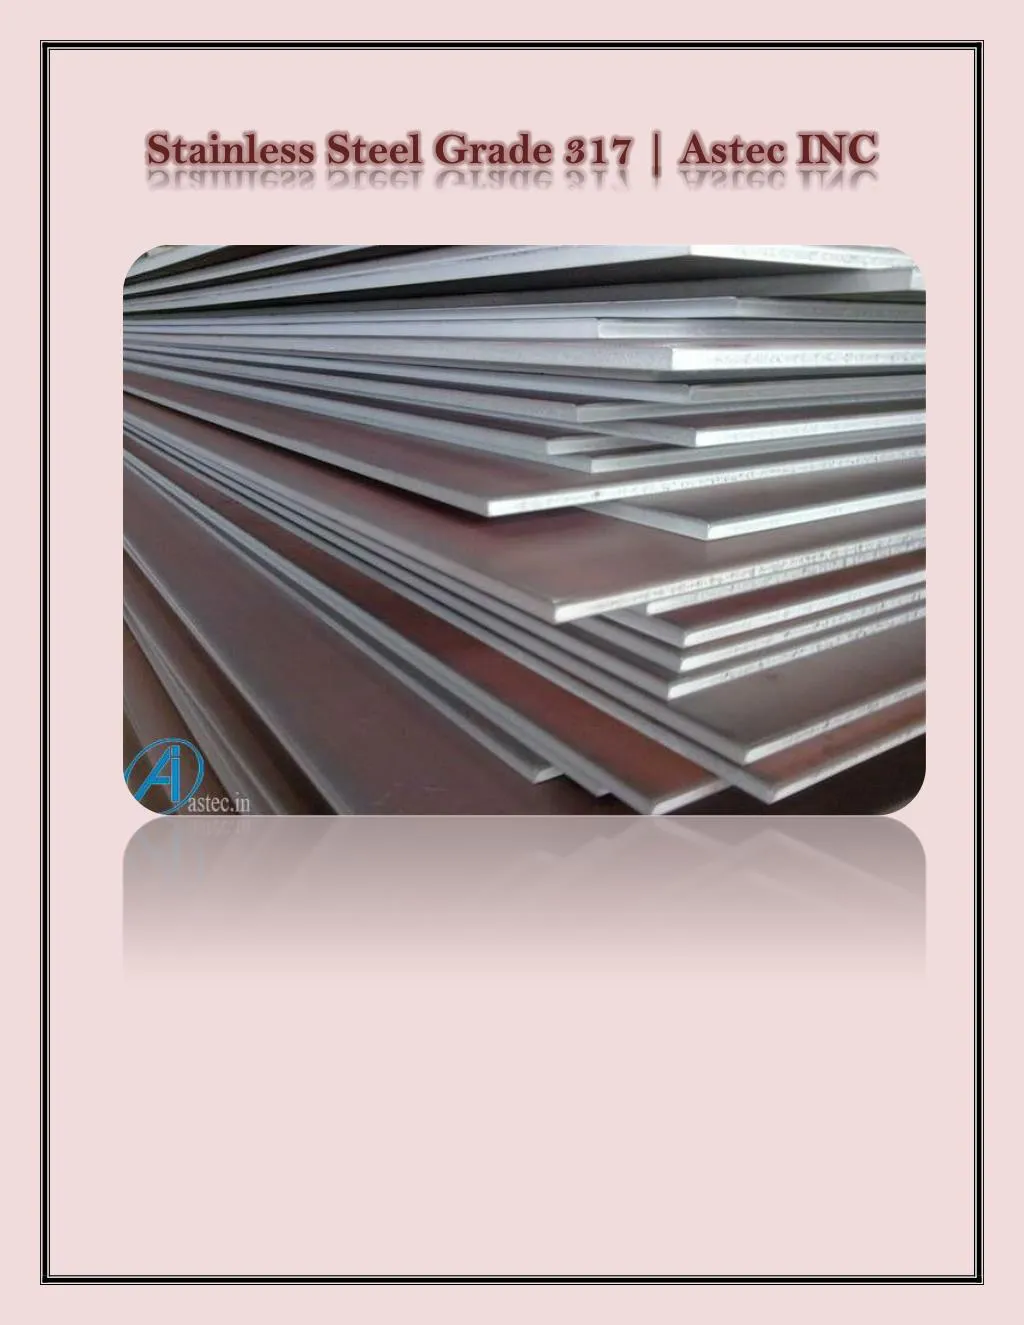 stainless steel grade 317 astec inc